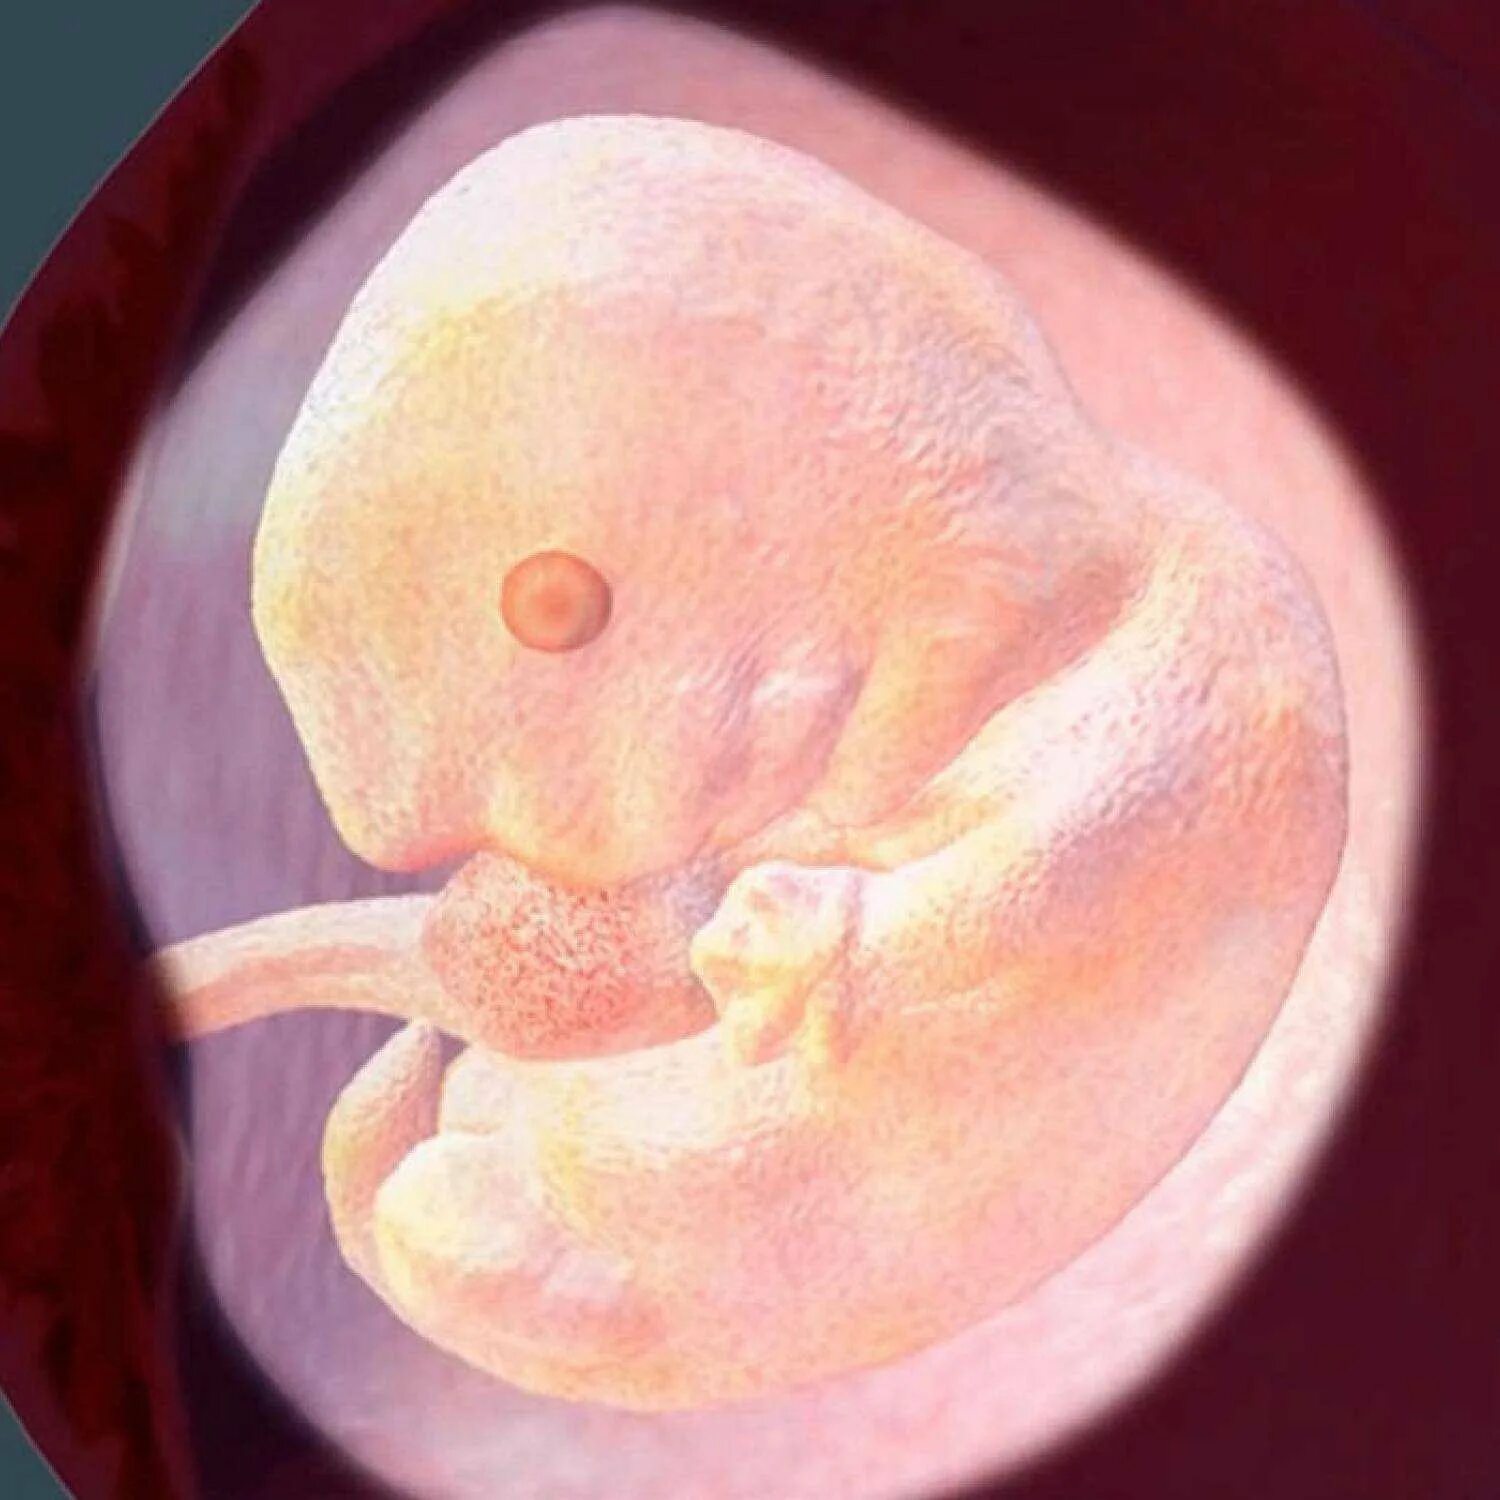 Плод забеременел. Малыш на 8 акушерской неделе беременности. 8 Недель беременности фото плода. Эмбрион на 8 неделе беременности. Эмбрион на 8 неделе акушерской беременности.